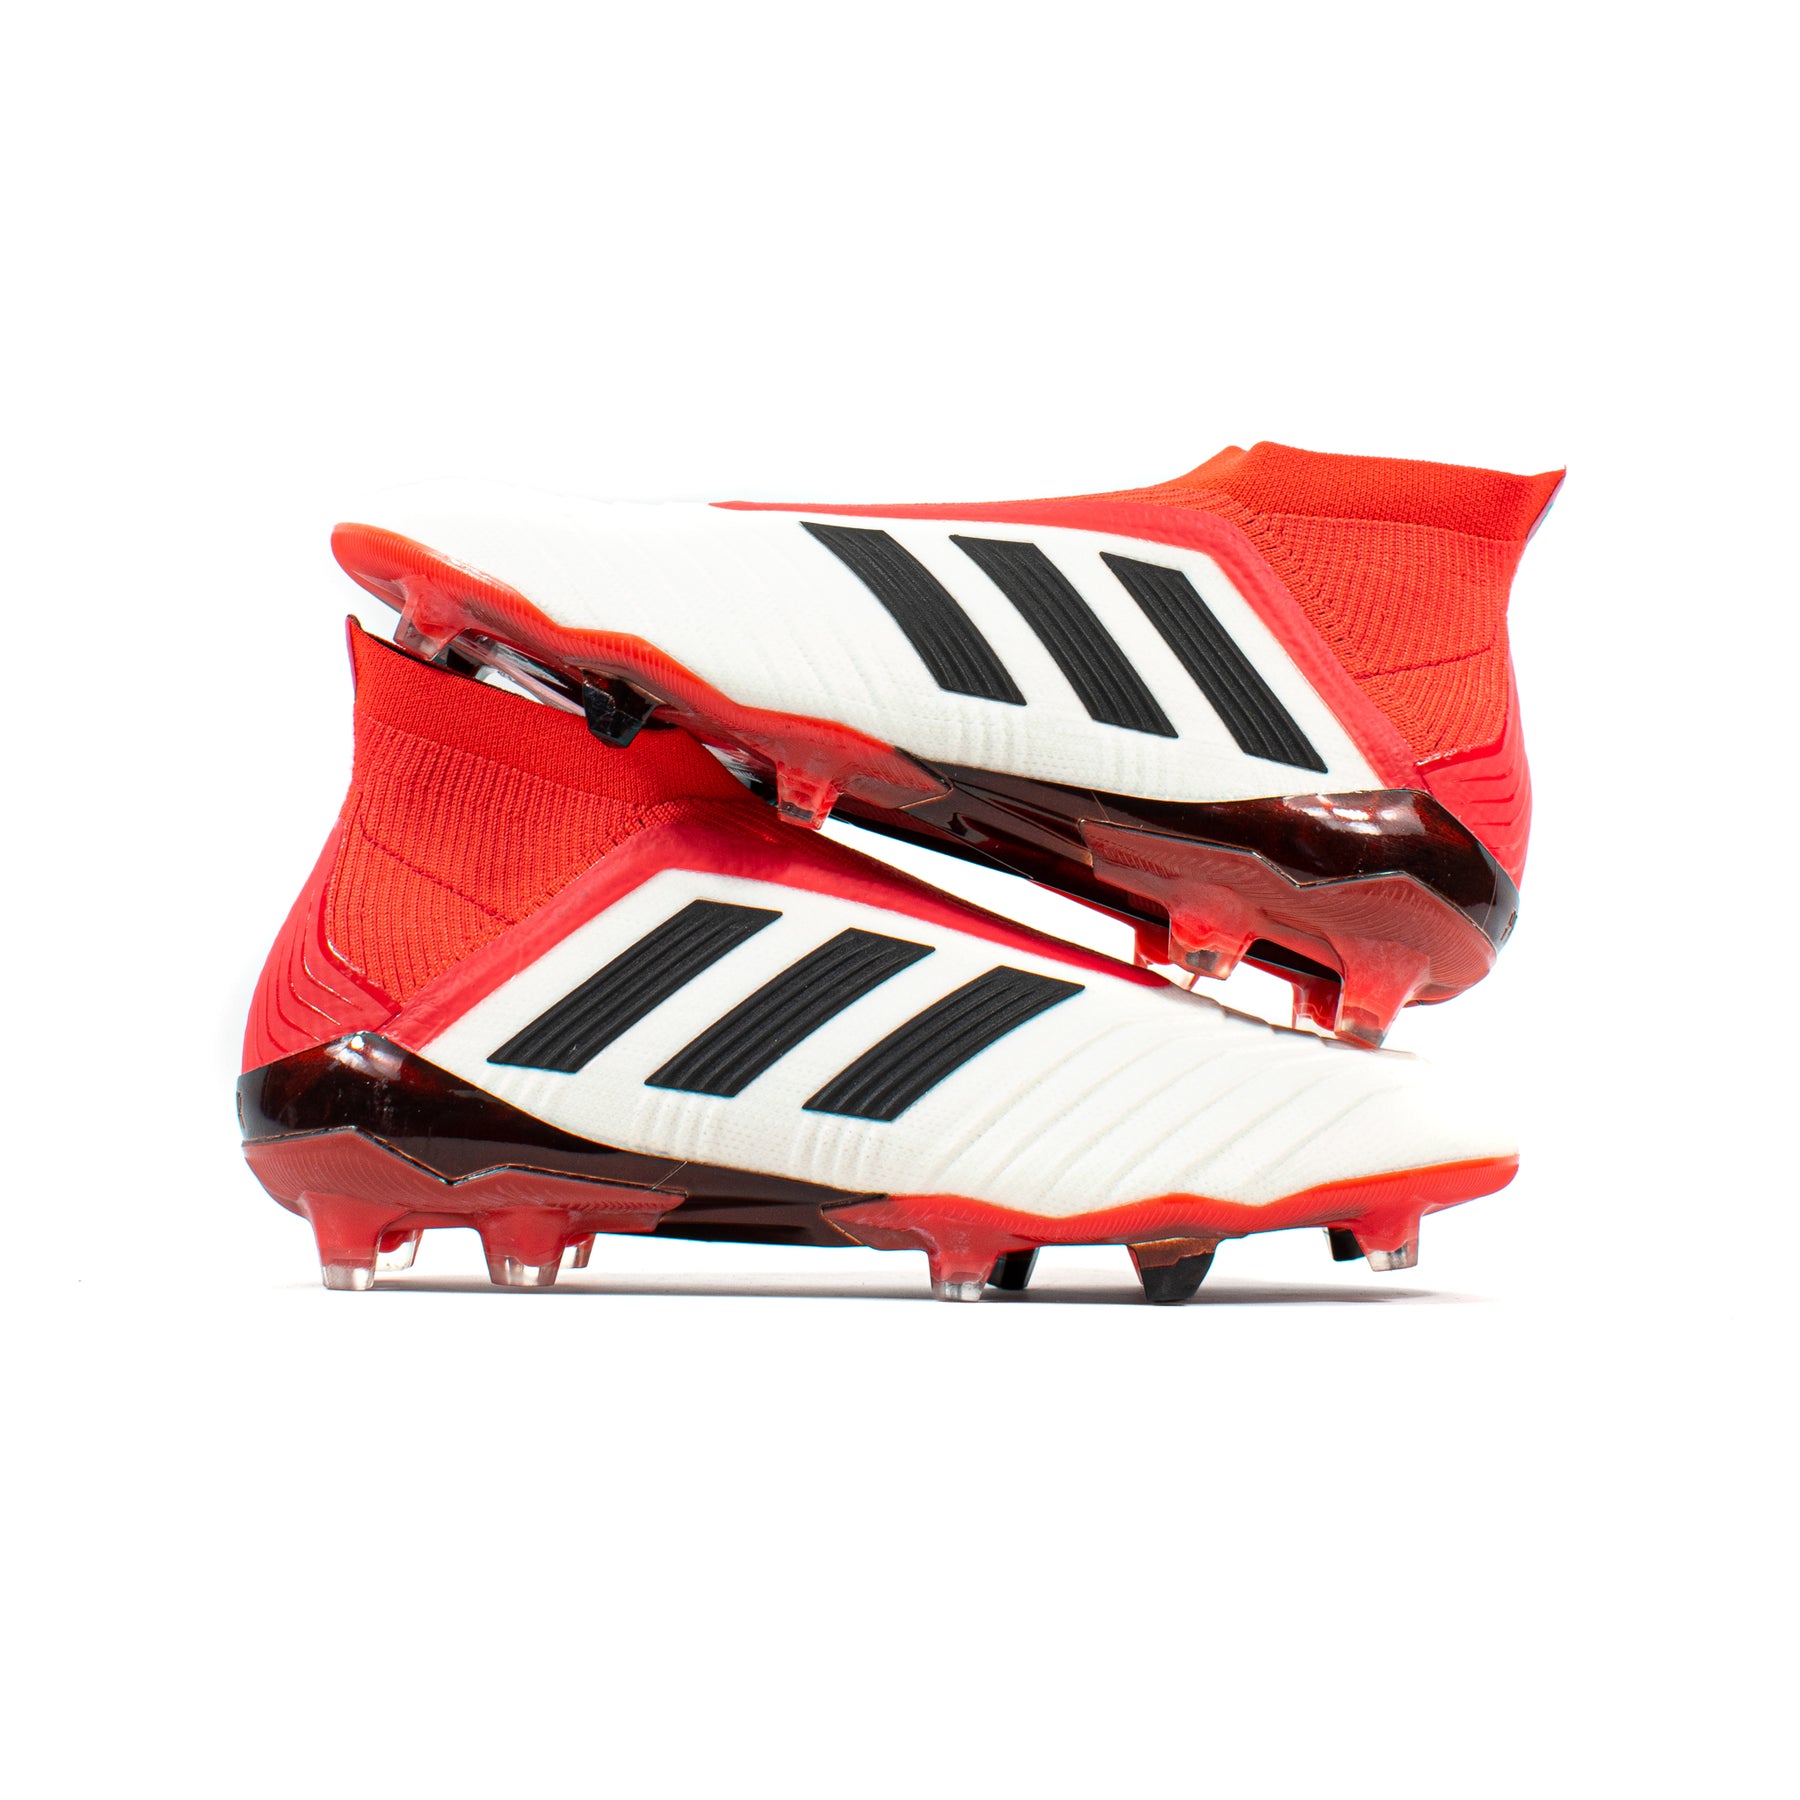 Adidas Predator 18+ FG – Classic Soccer Cleats